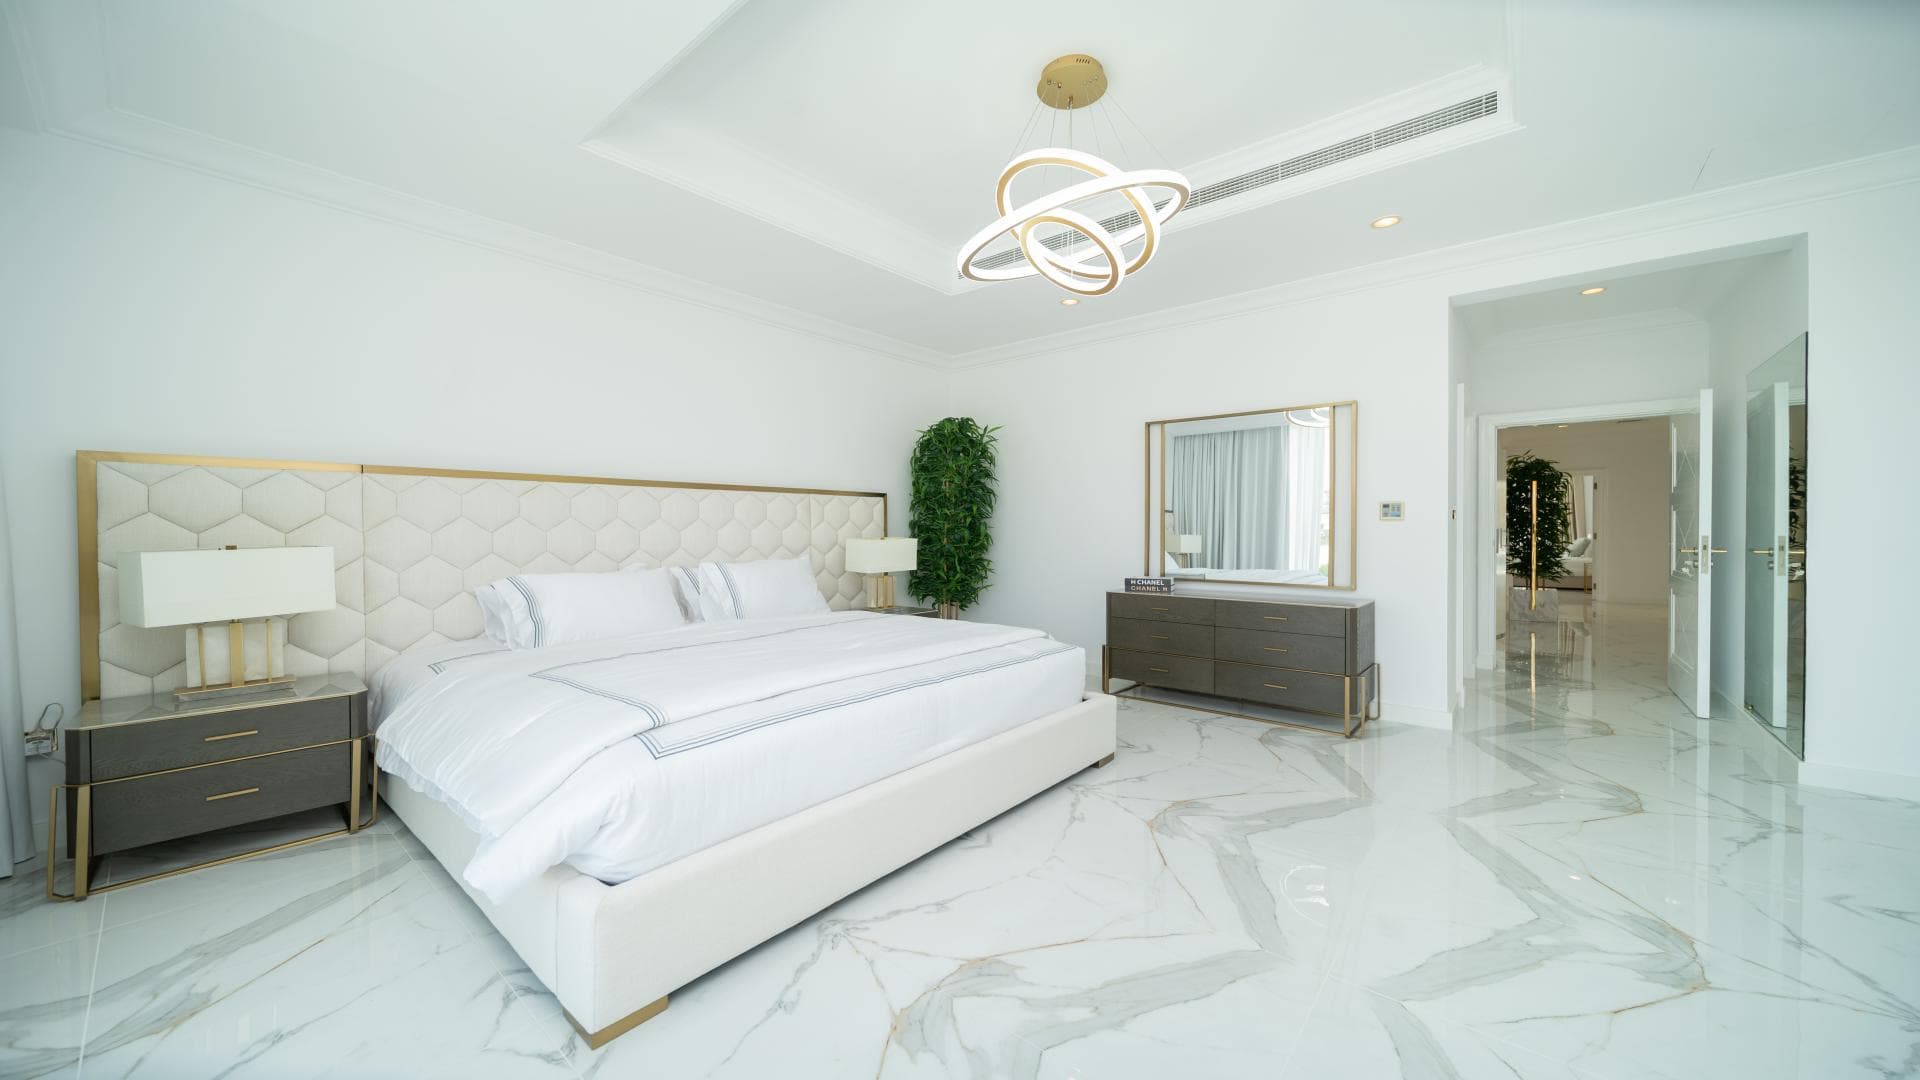 4 Bedroom Villa For Rent Mughal Lp36499 1d125ee49757cd00.jpg